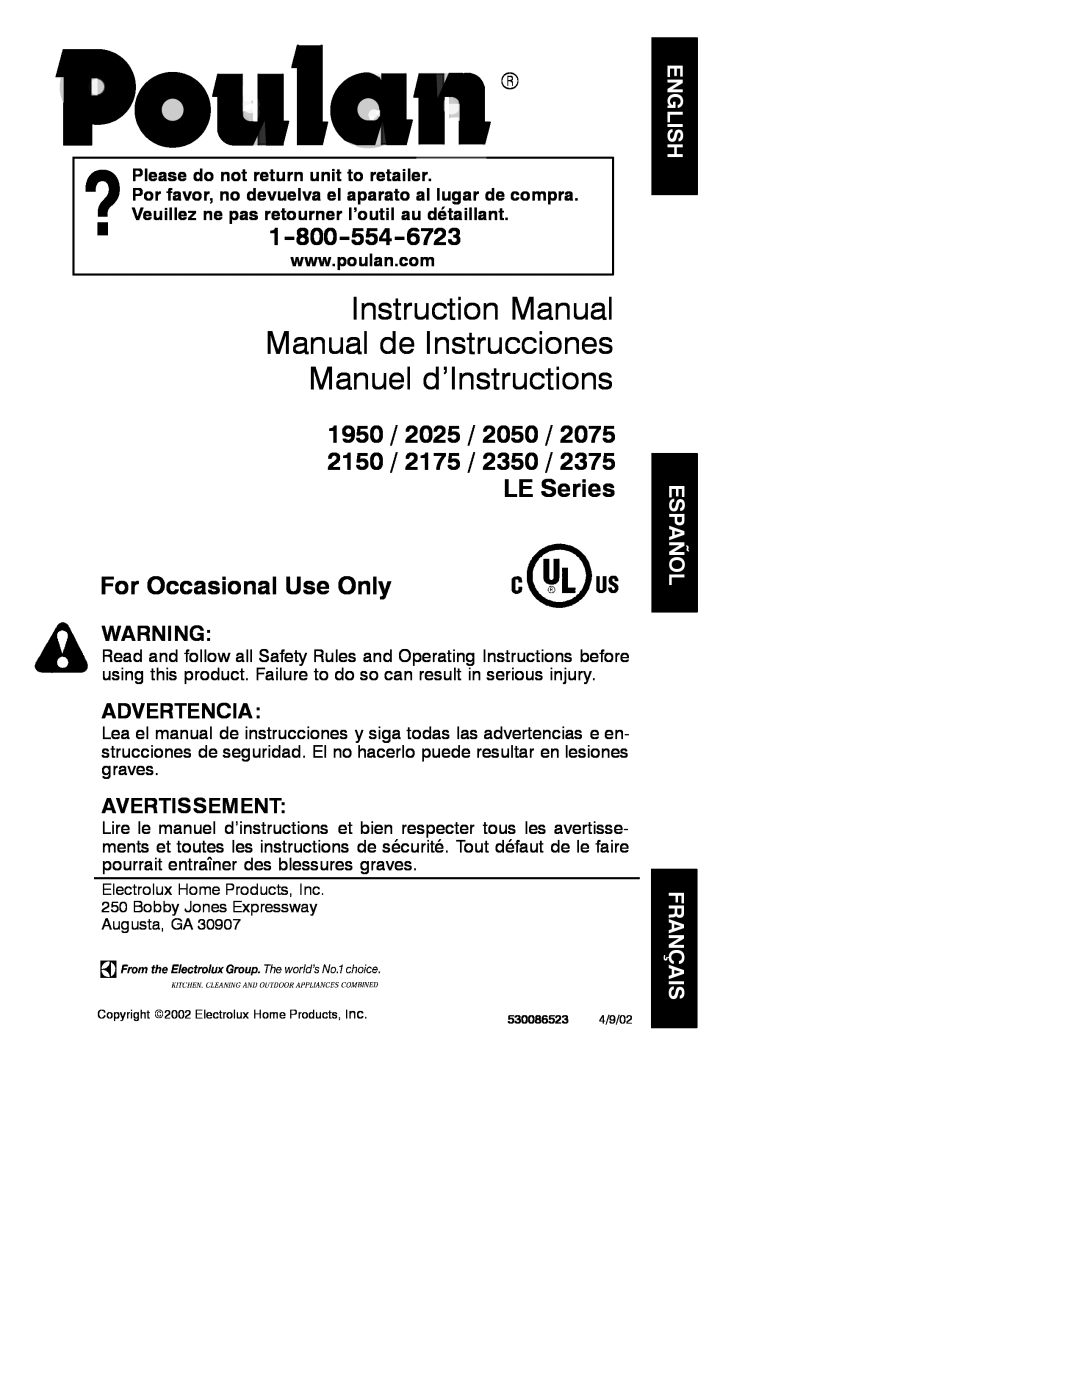 Poulan 2050 instruction manual Instruction Manual Manual de Instrucciones Manuel d’Instructions, For Occasional Use Only 